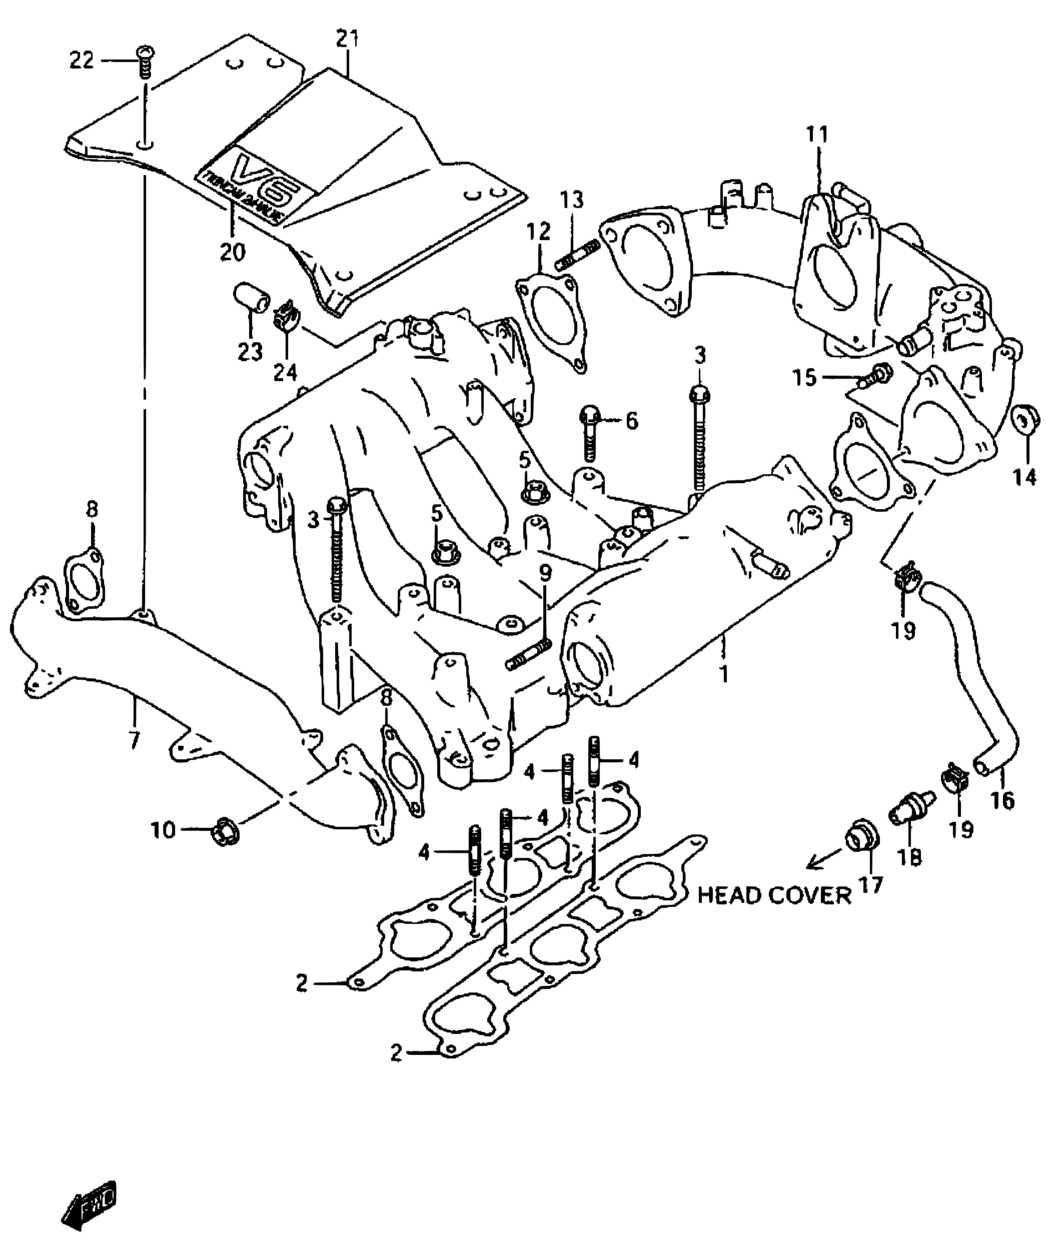 [DIAGRAM] Wiring Diagram For Suzuki Grand Vitara 2001 - MYDIAGRAM.ONLINE